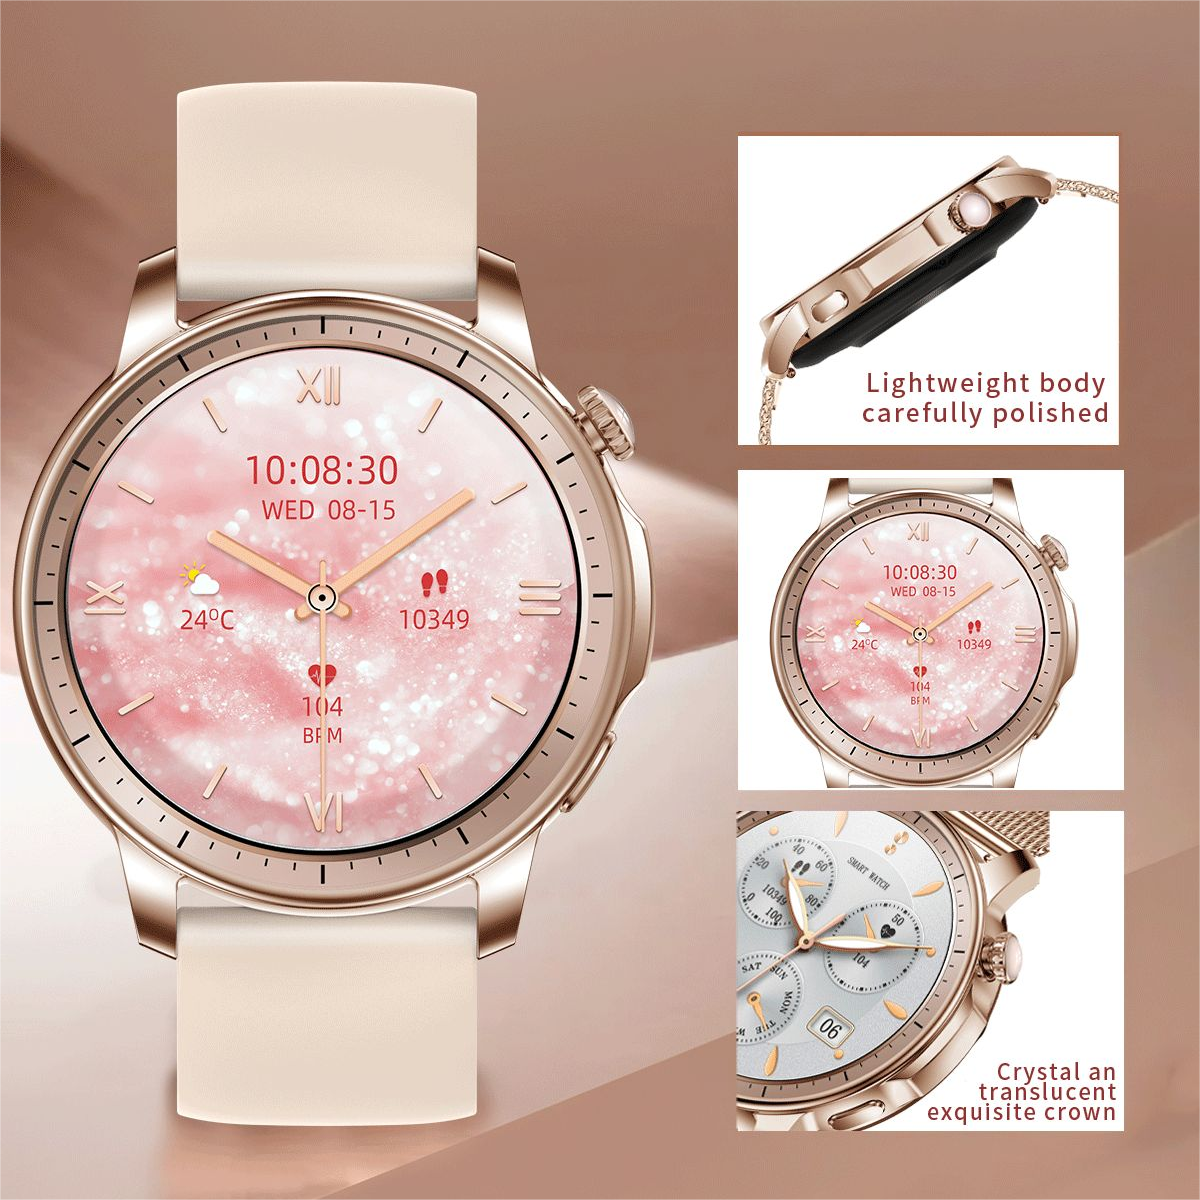 COLMI V65 Smartwatch 1.32″ AMOLED Display Fashion Unisex Smart Watch ho an'ny vehivavy